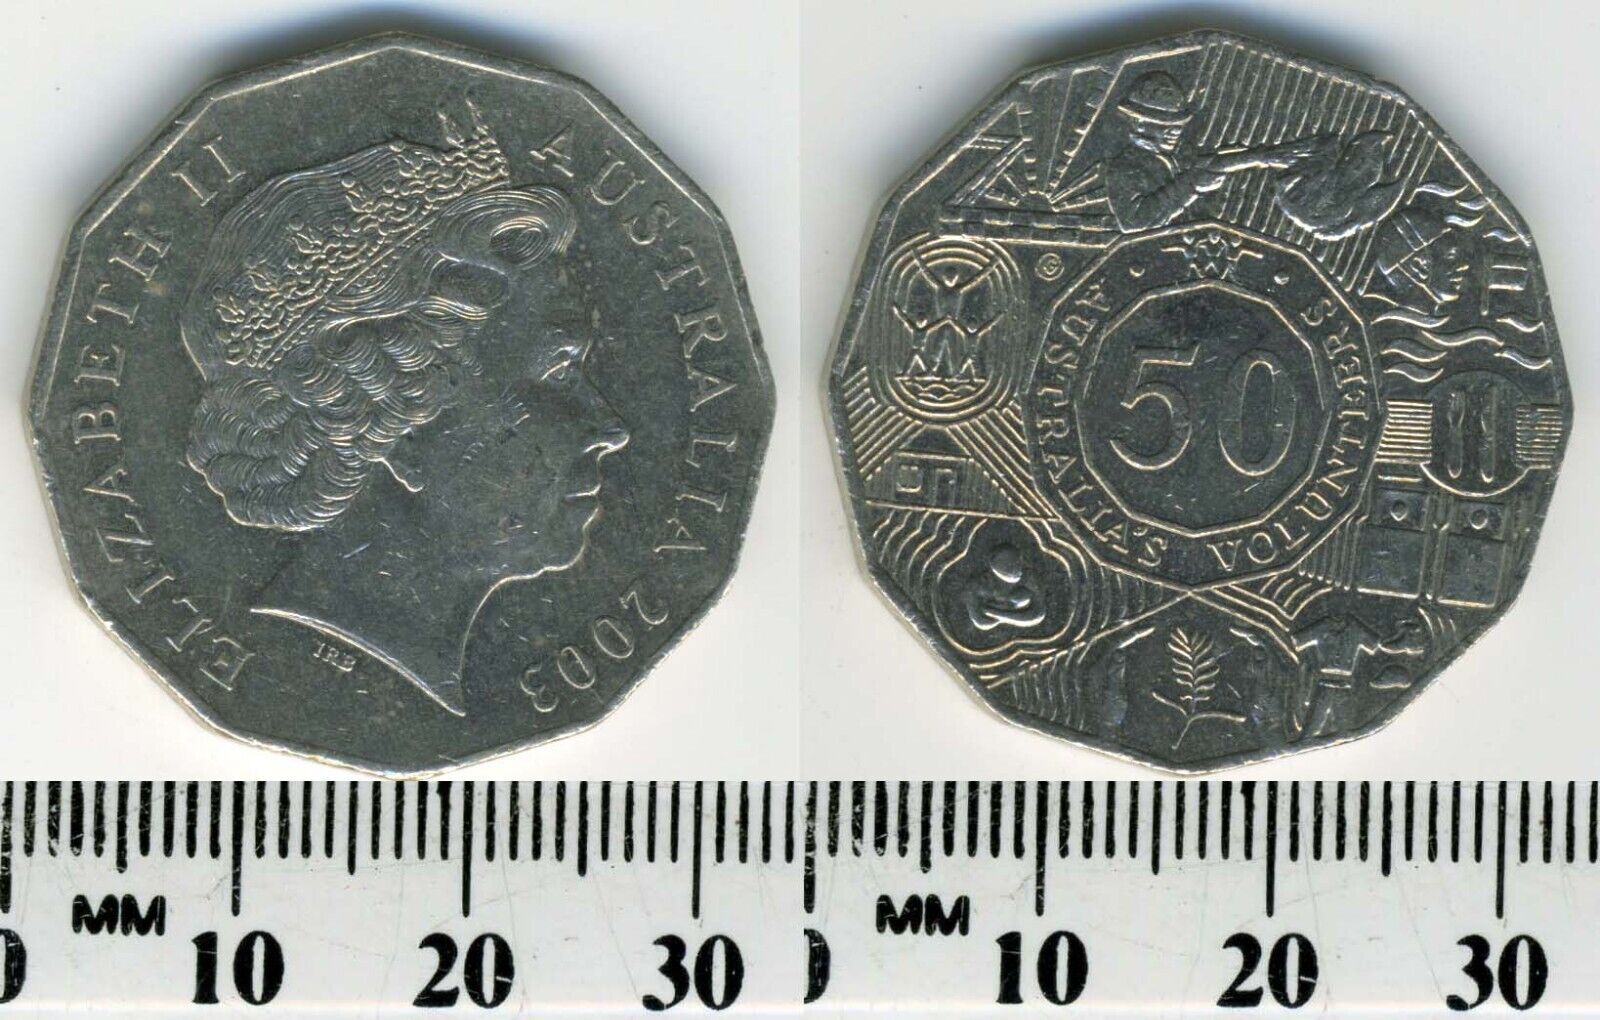 Australia 2003 - 50 Cents Cu-Nickel Coin - Elizabeth II - Australia's Volunteers